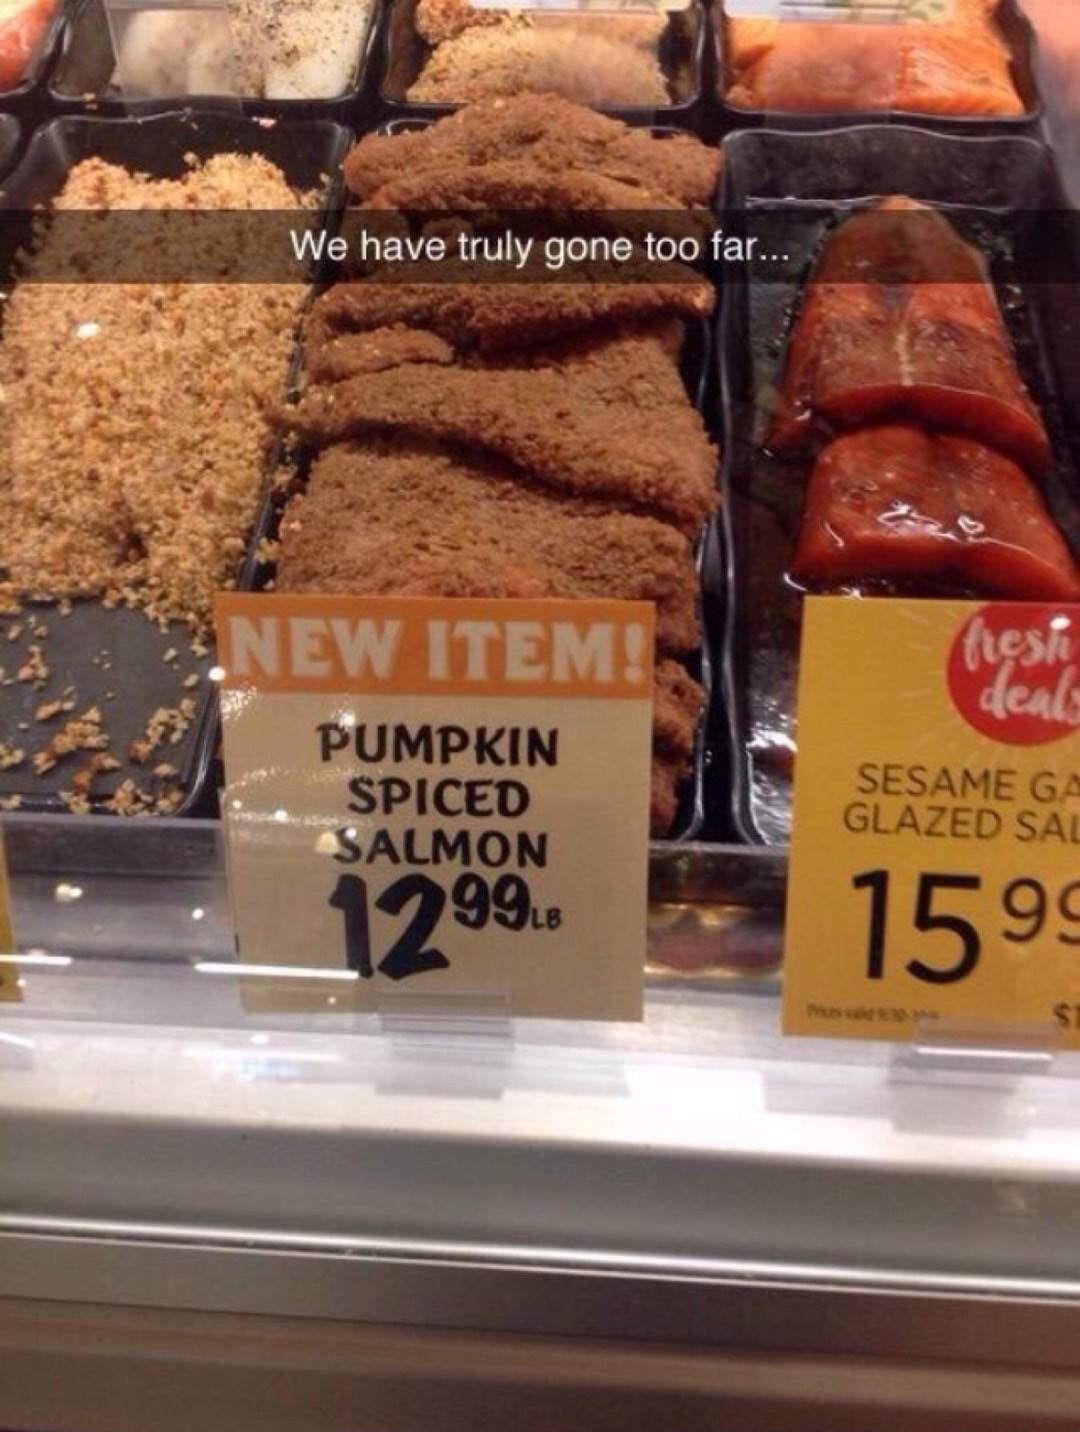 pumpkin spiced - We have truly gone too far... ftesi New Item! deal Pumpkin Spiced Salmon Sesame Ga Glazed Sa 99LB 159